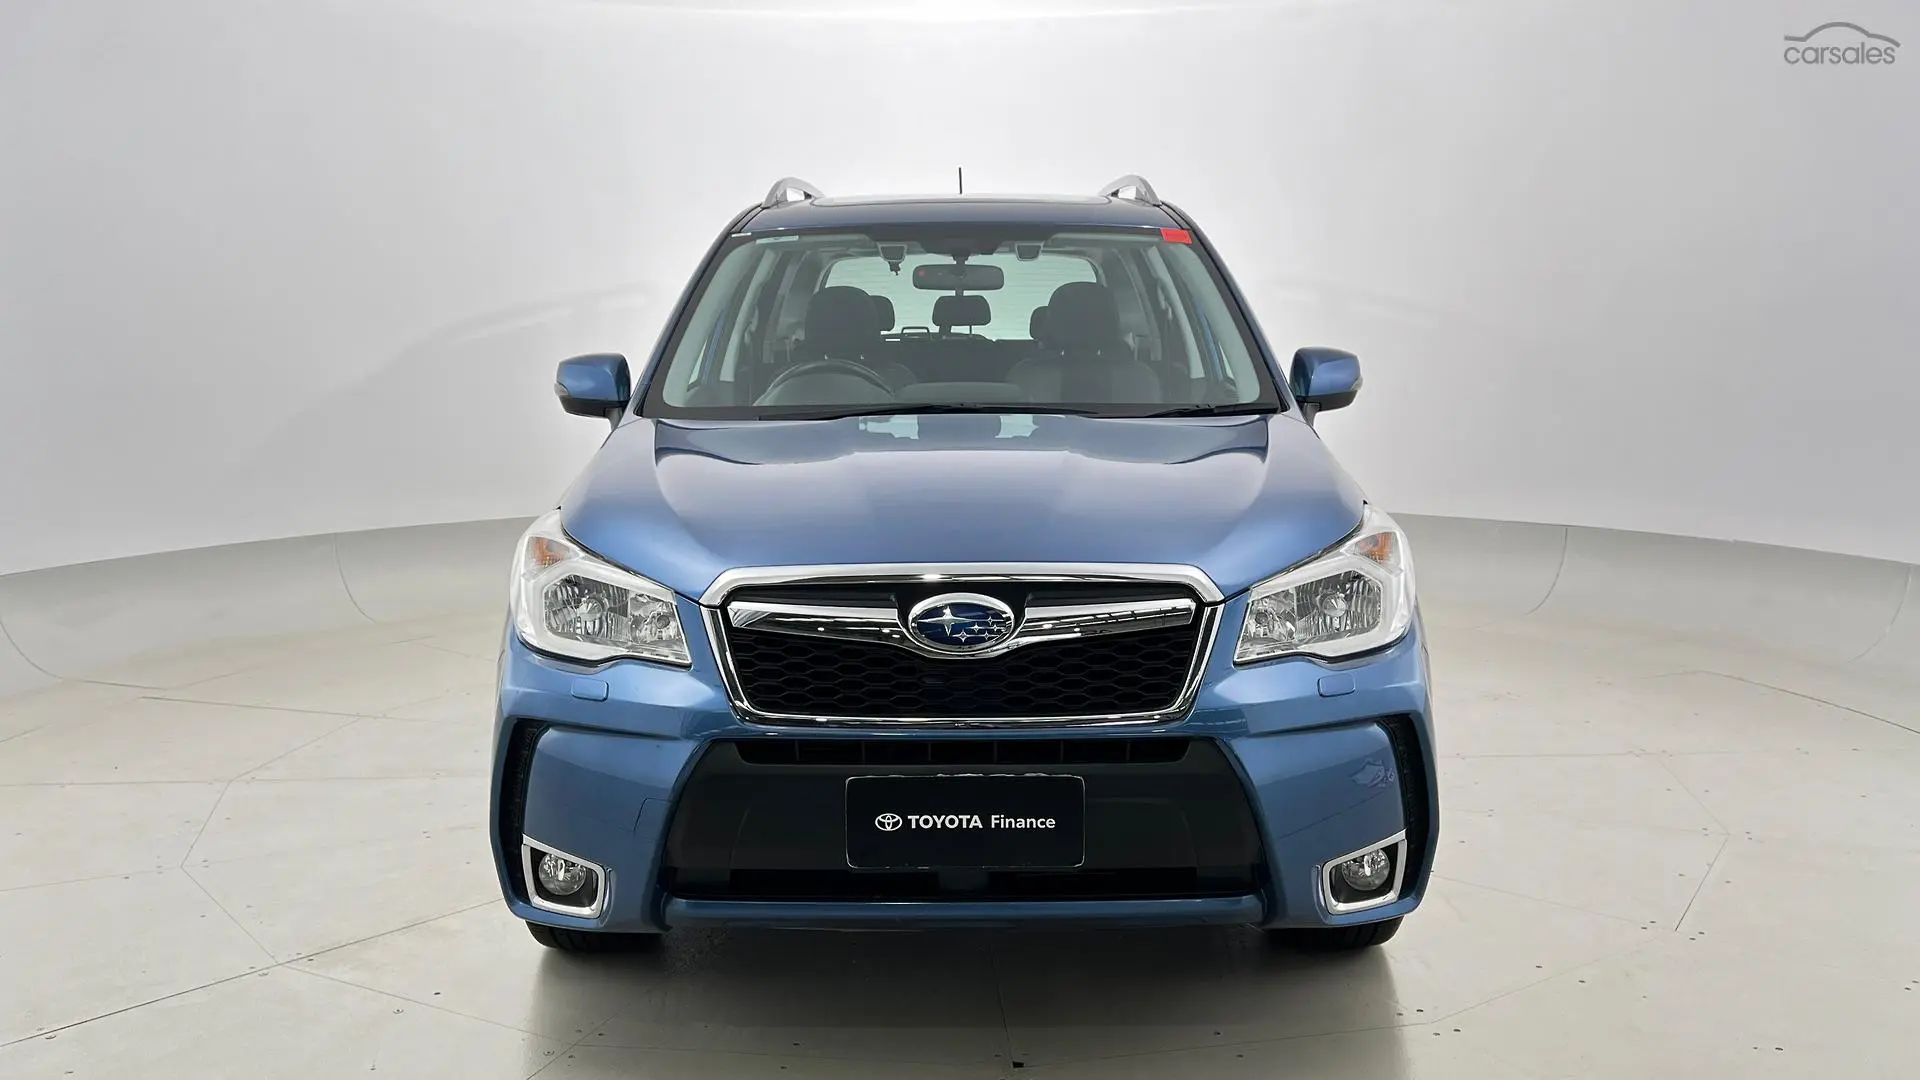 2014 Subaru Forester Image 2